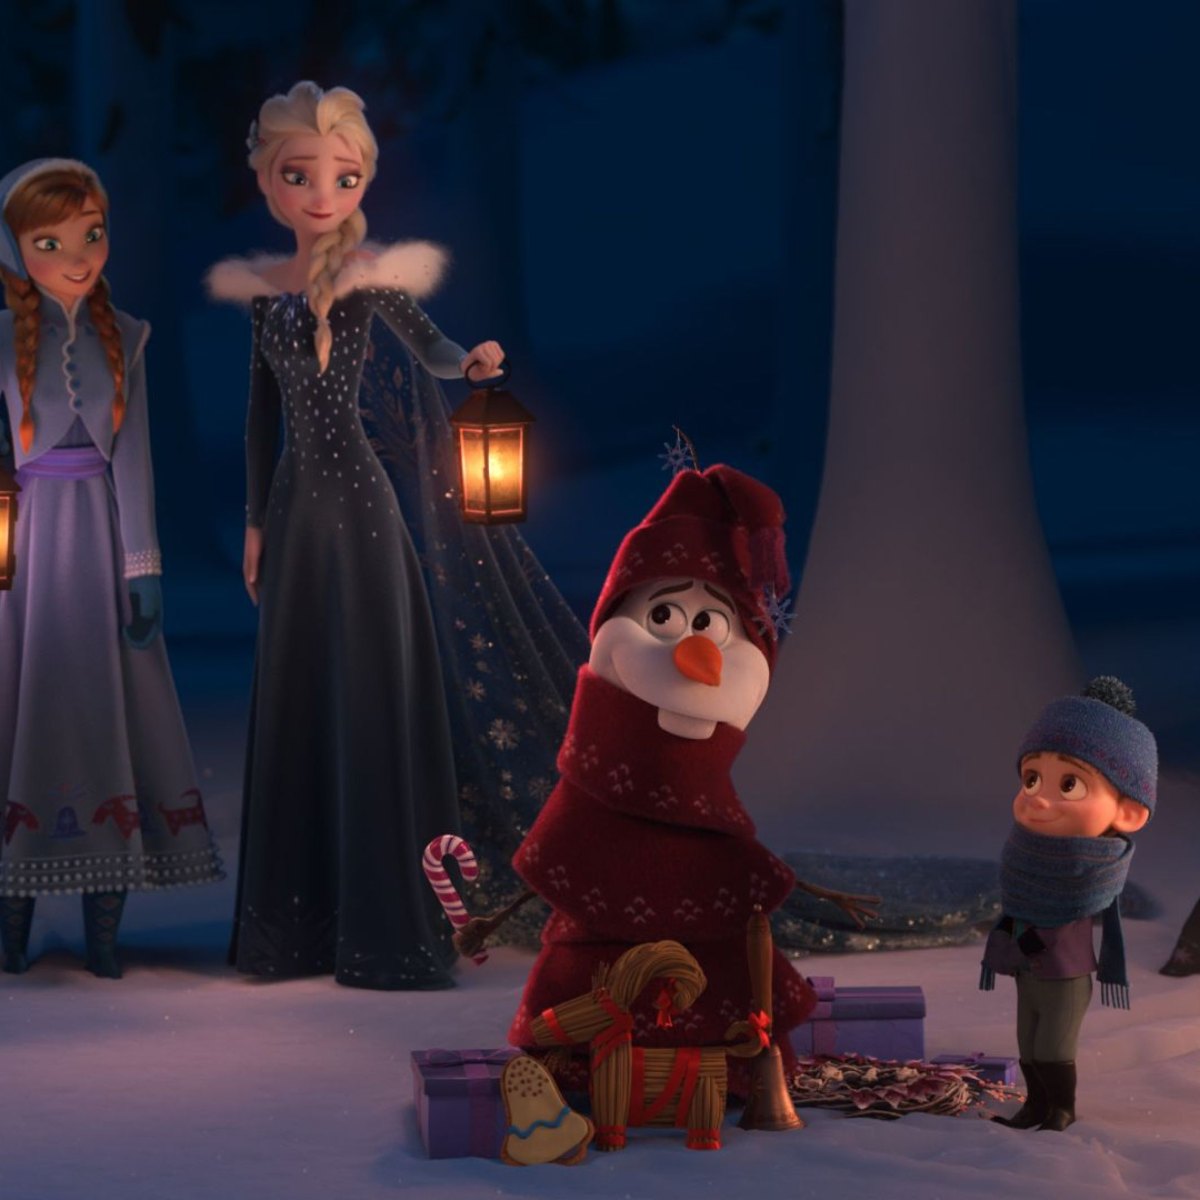 Frozen 3': Disney Movie Date, Cast, Plot, Details